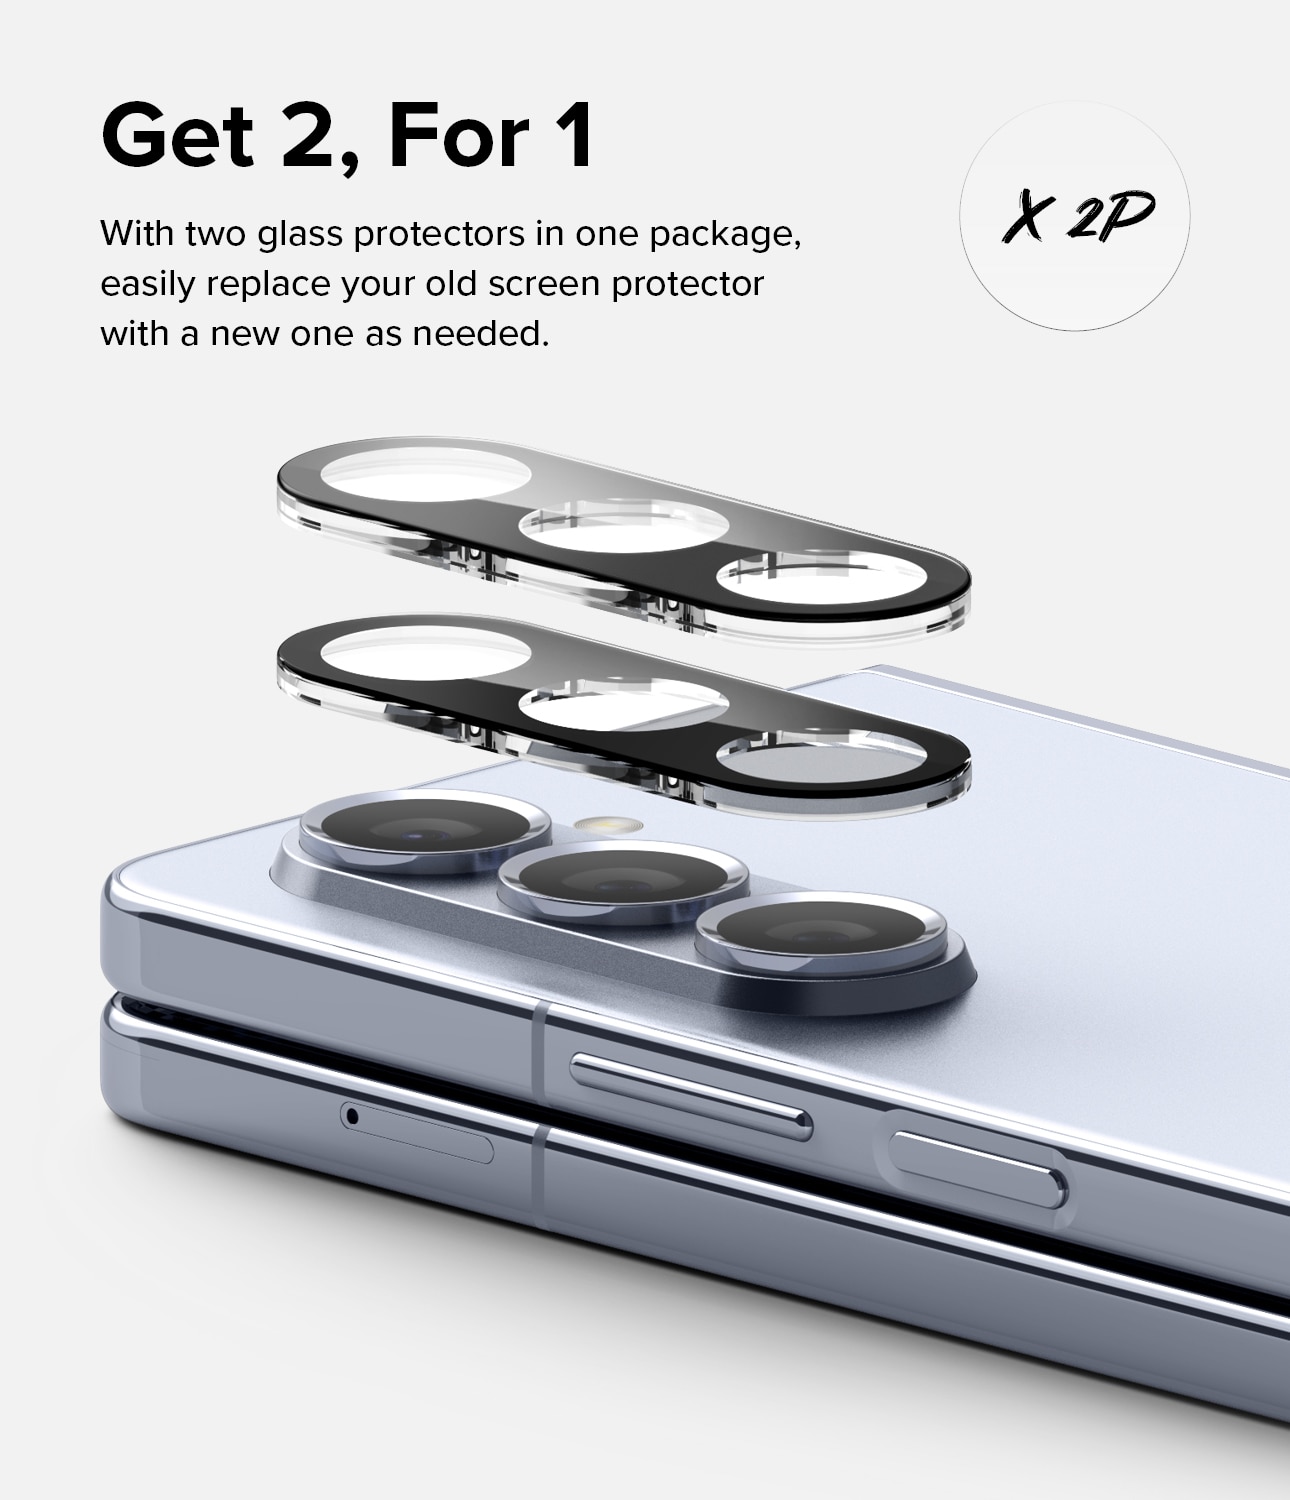 Samsung Galaxy Z Fold 5 Kameraskydd i glas (2-pack)